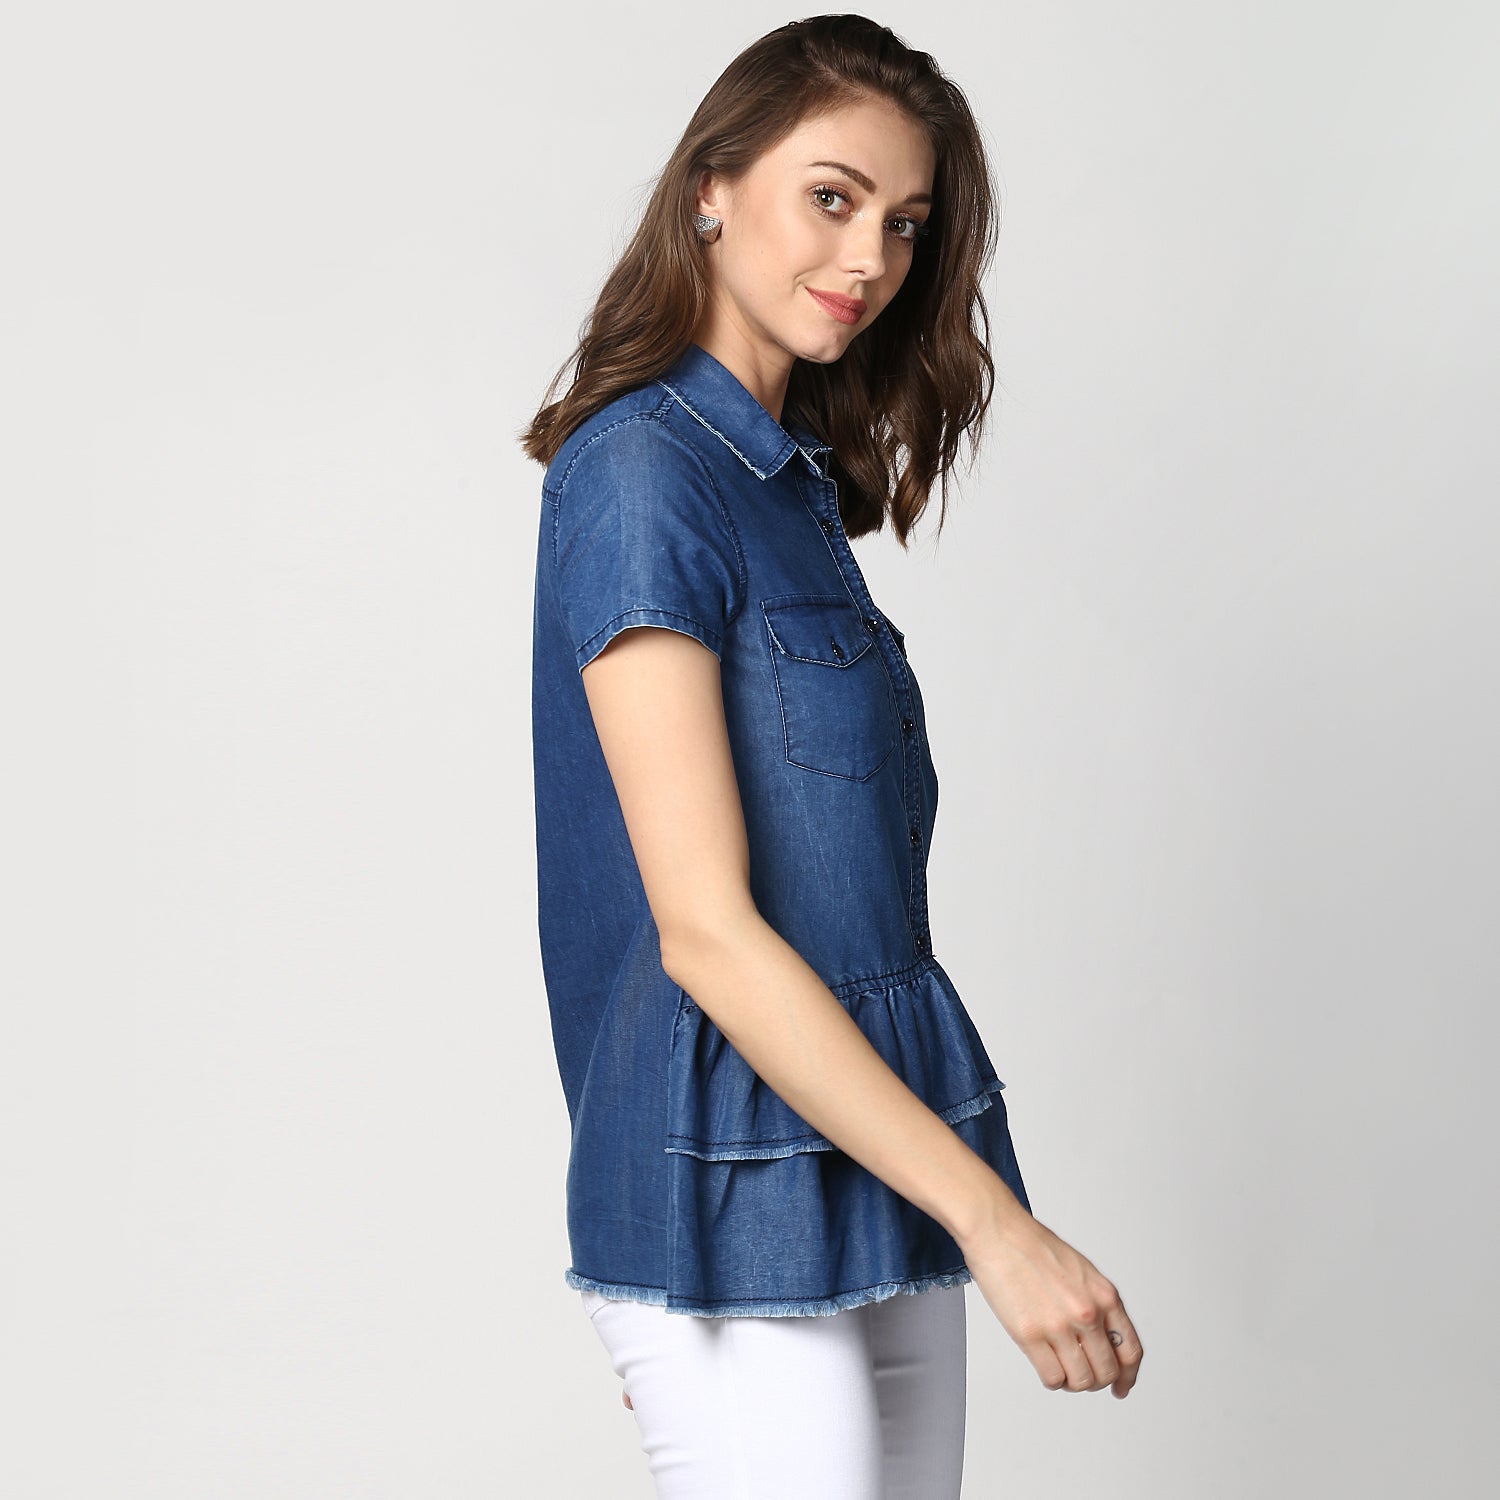 Women's Navy Blue Denim Peplum Top cum Shirt - StyleStone